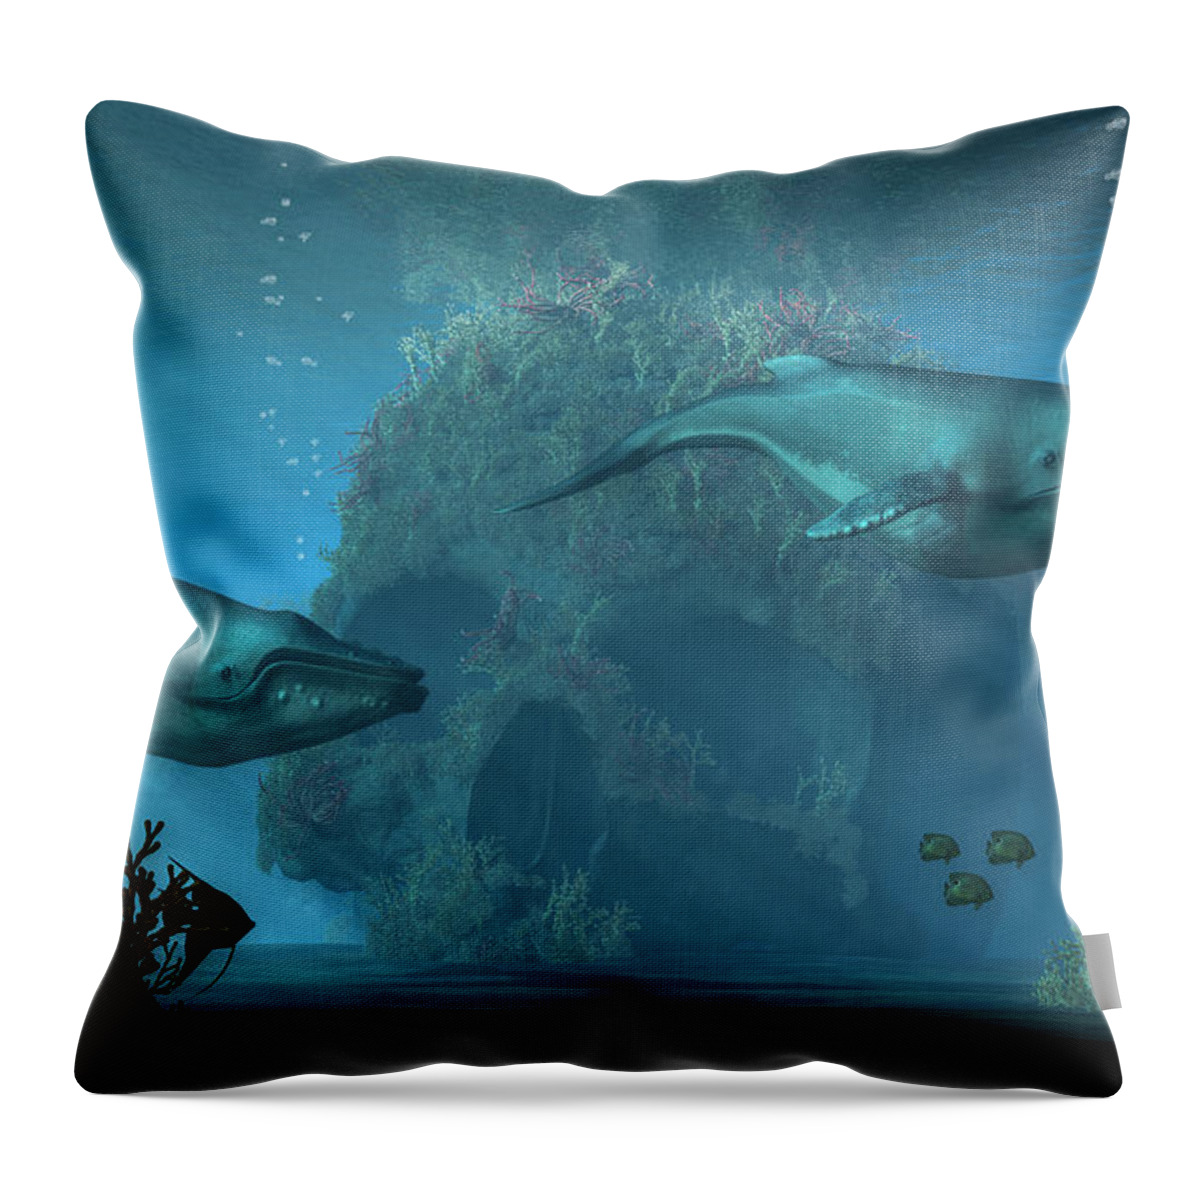  Throw Pillow featuring the digital art Poseidon's Grave by Daniel Eskridge